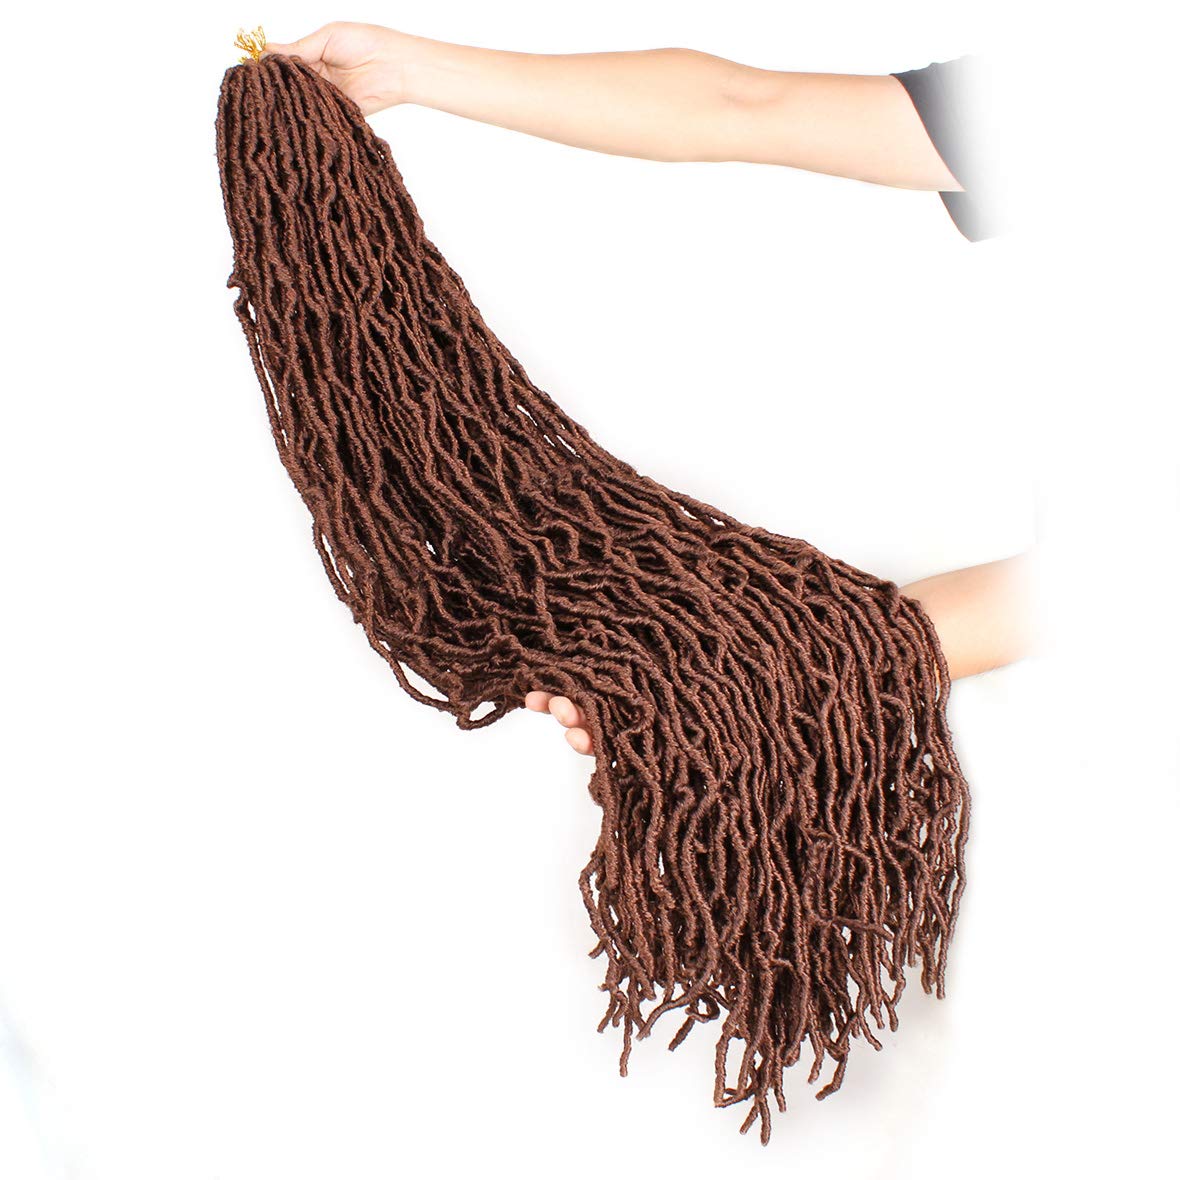 36 Inch Faux Locs Crochet Hair Super Long Soft Locs Crochet Braids Hair 6  Packs/lot 95g Goddess Locs Dreadlocs Synthetic Hair Extend Pre Looped brown